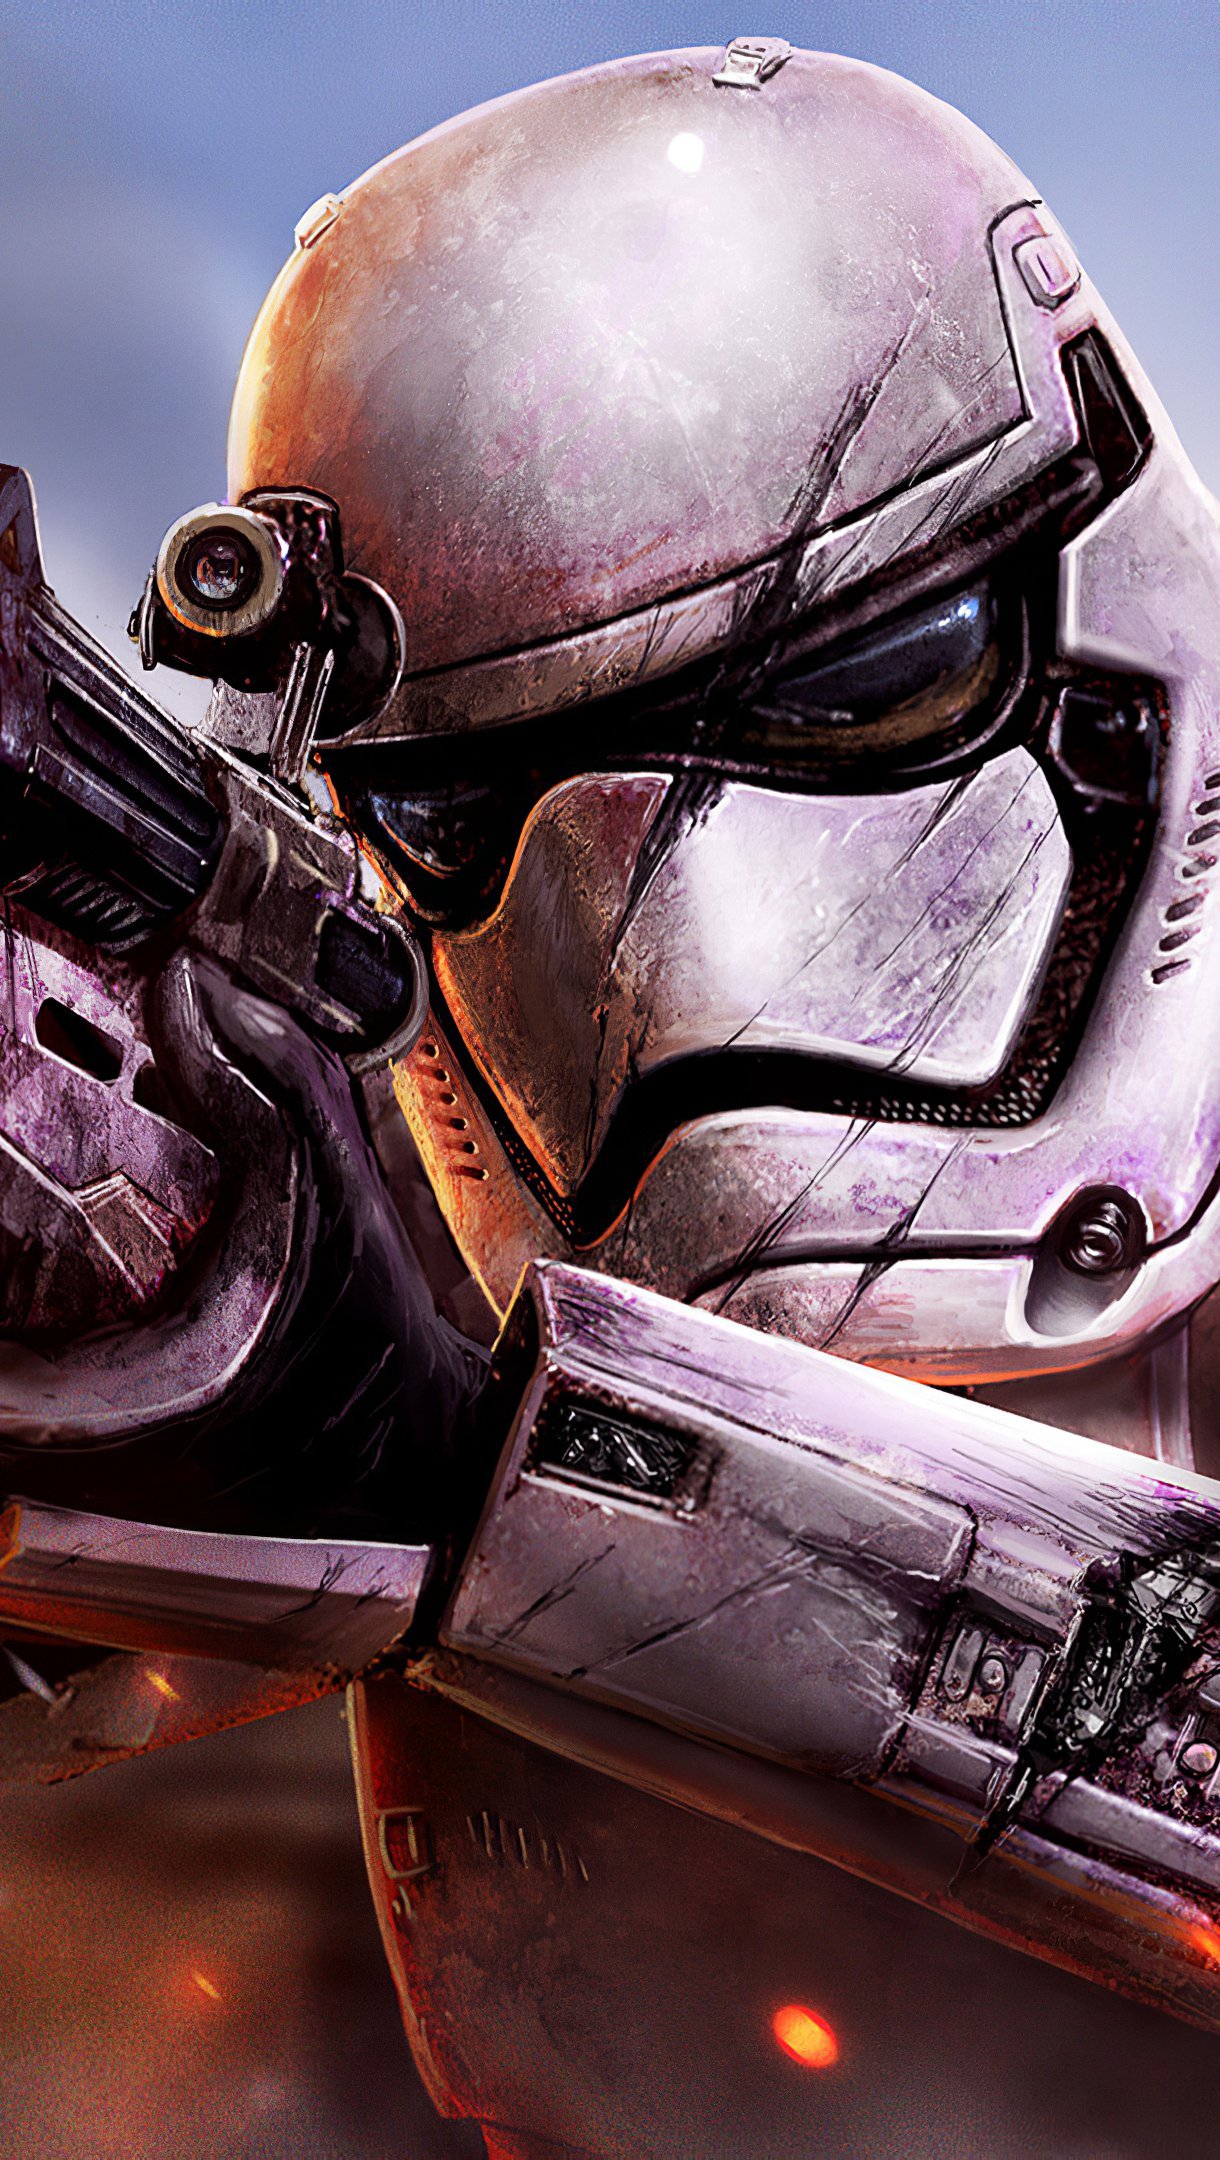 Wallpaper Stormtrooper from Star Wars Battlefront Vertical